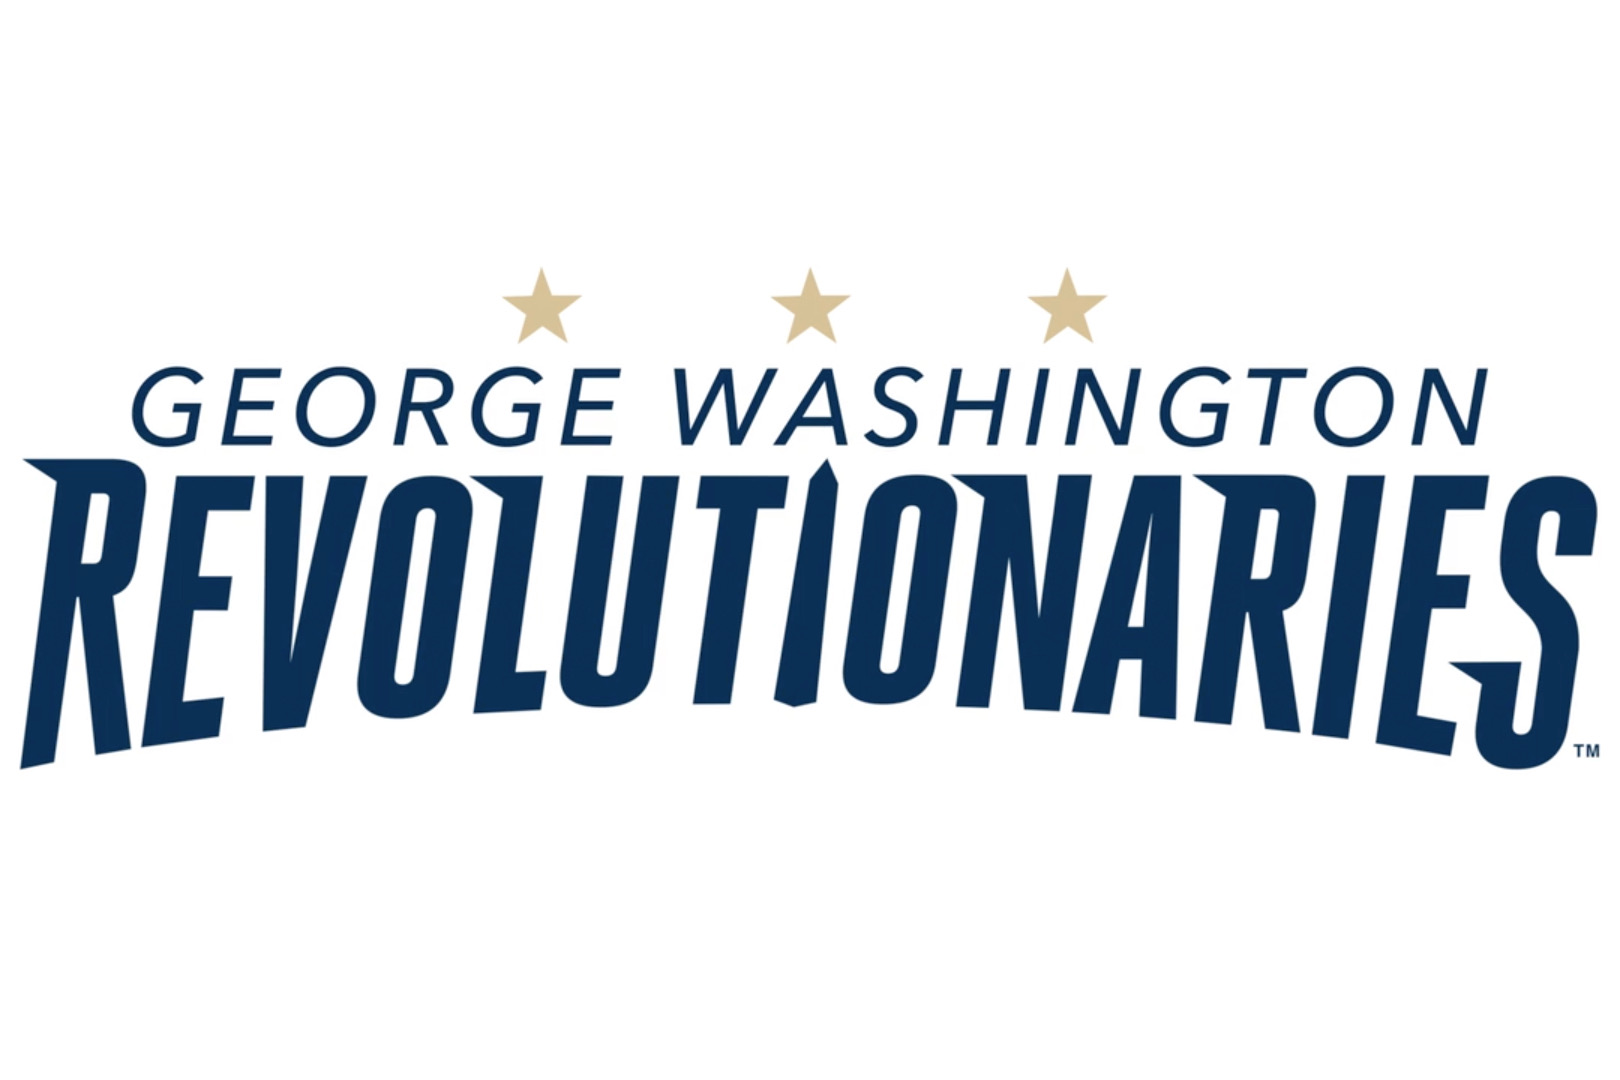 George Washington Revolutionaries 